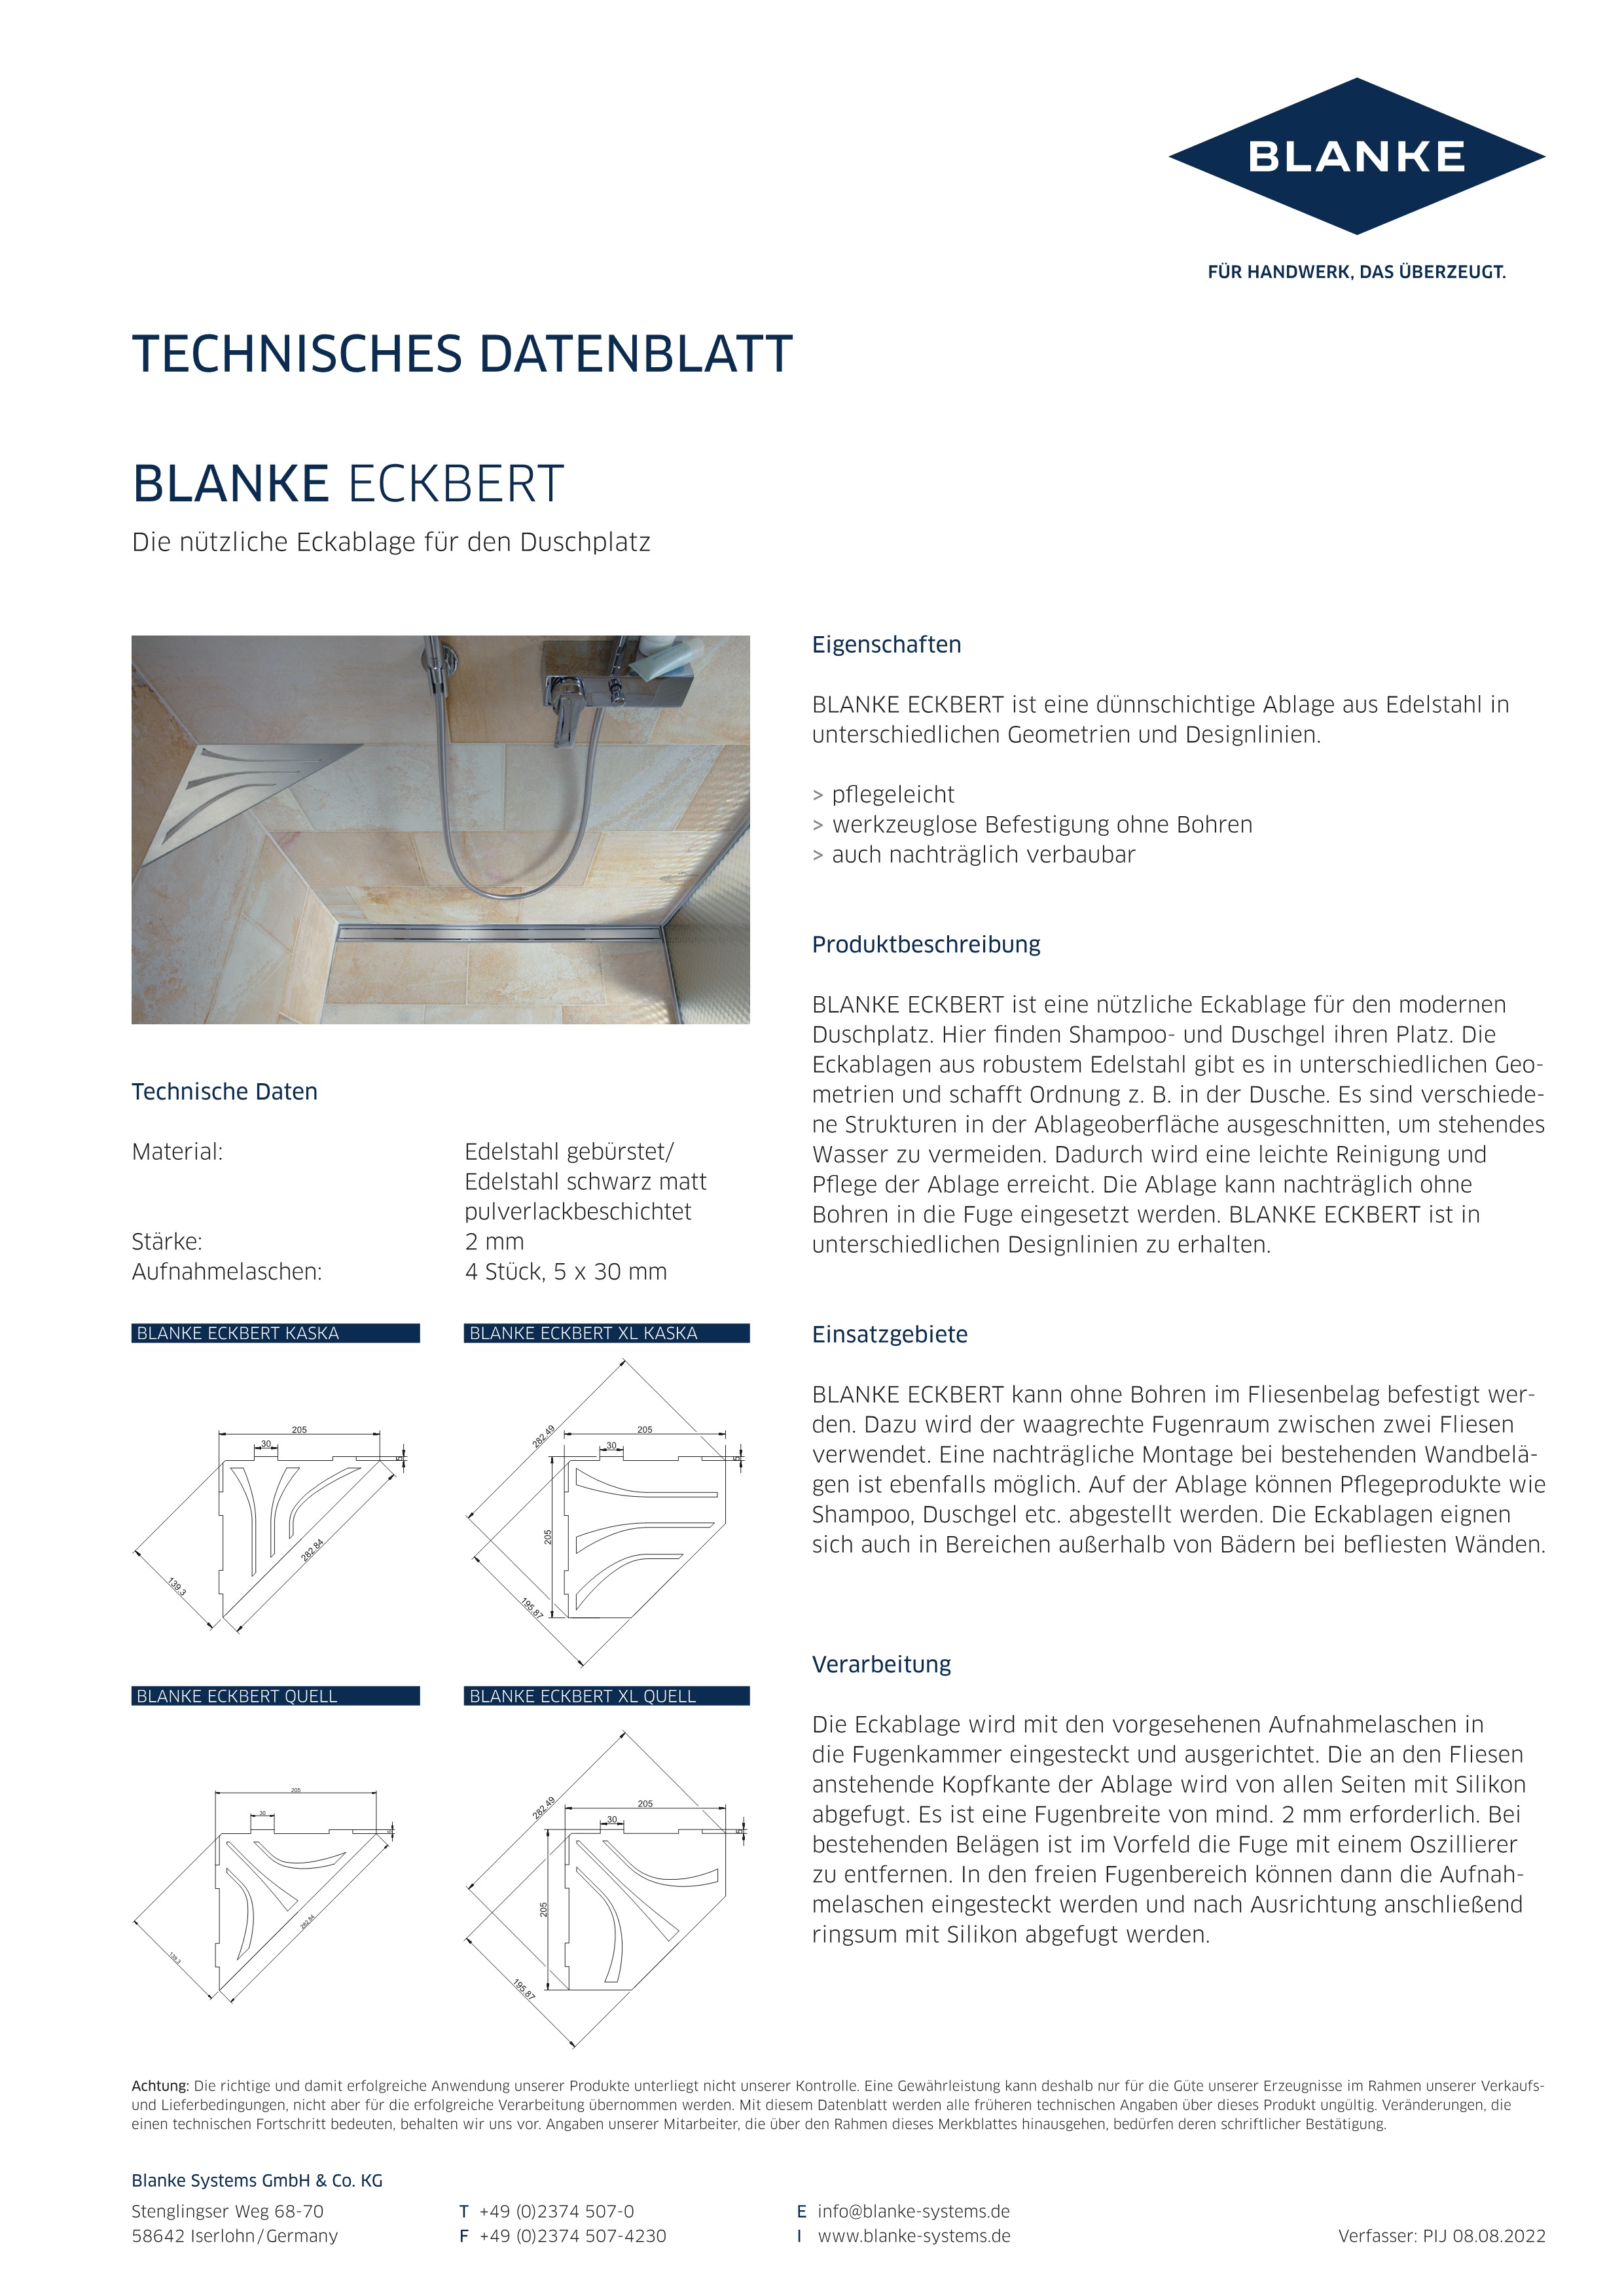 BLANKE ECKBERT Technisches Datenblatt